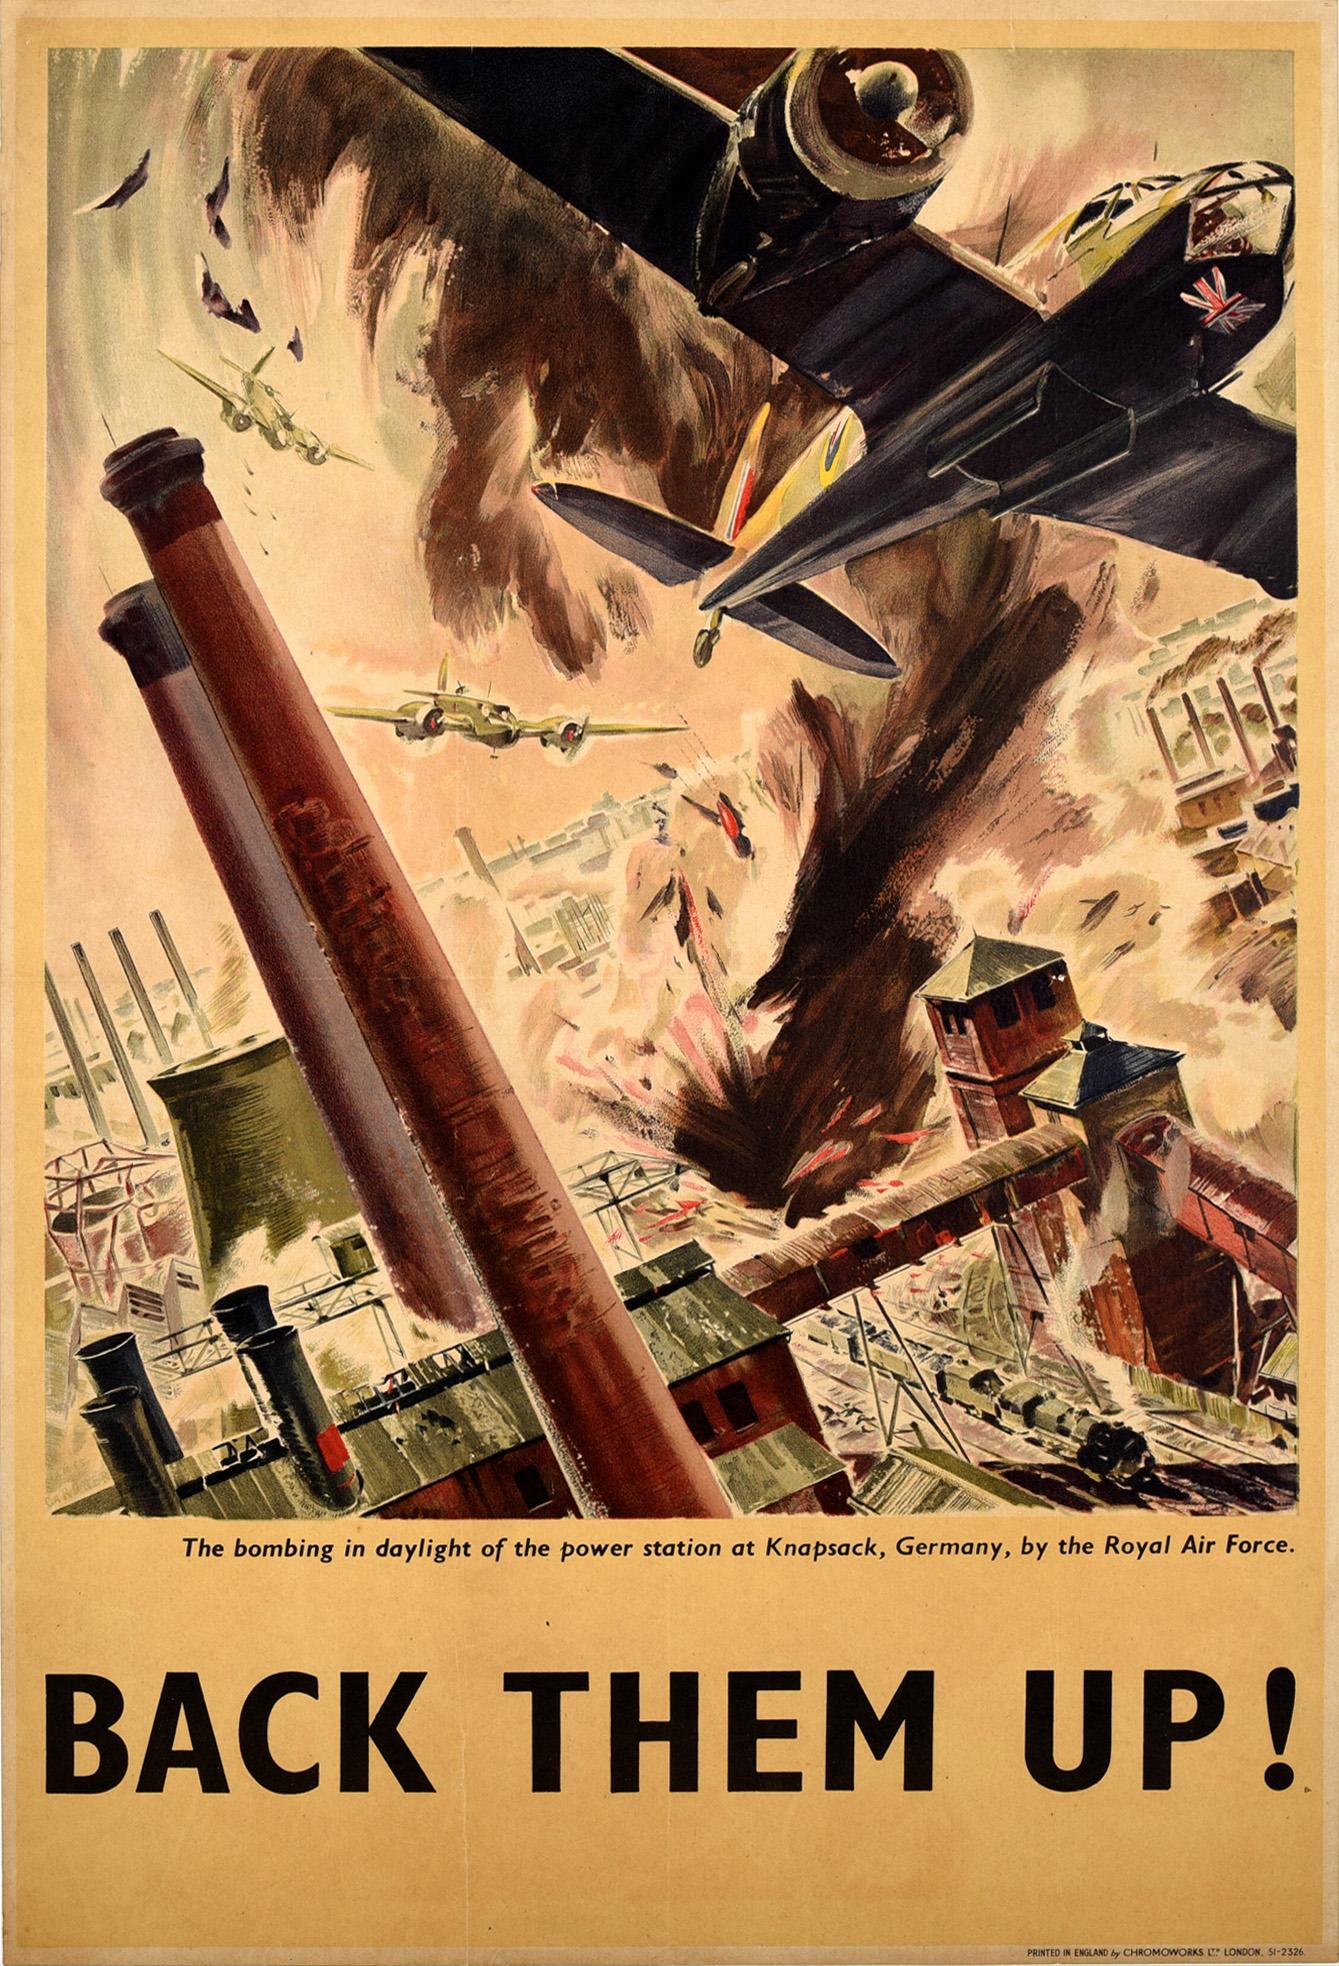 James Gardner Print - Original Vintage WWII Poster Back Them Up RAF Royal Air Force Aircraft Bomb Raid